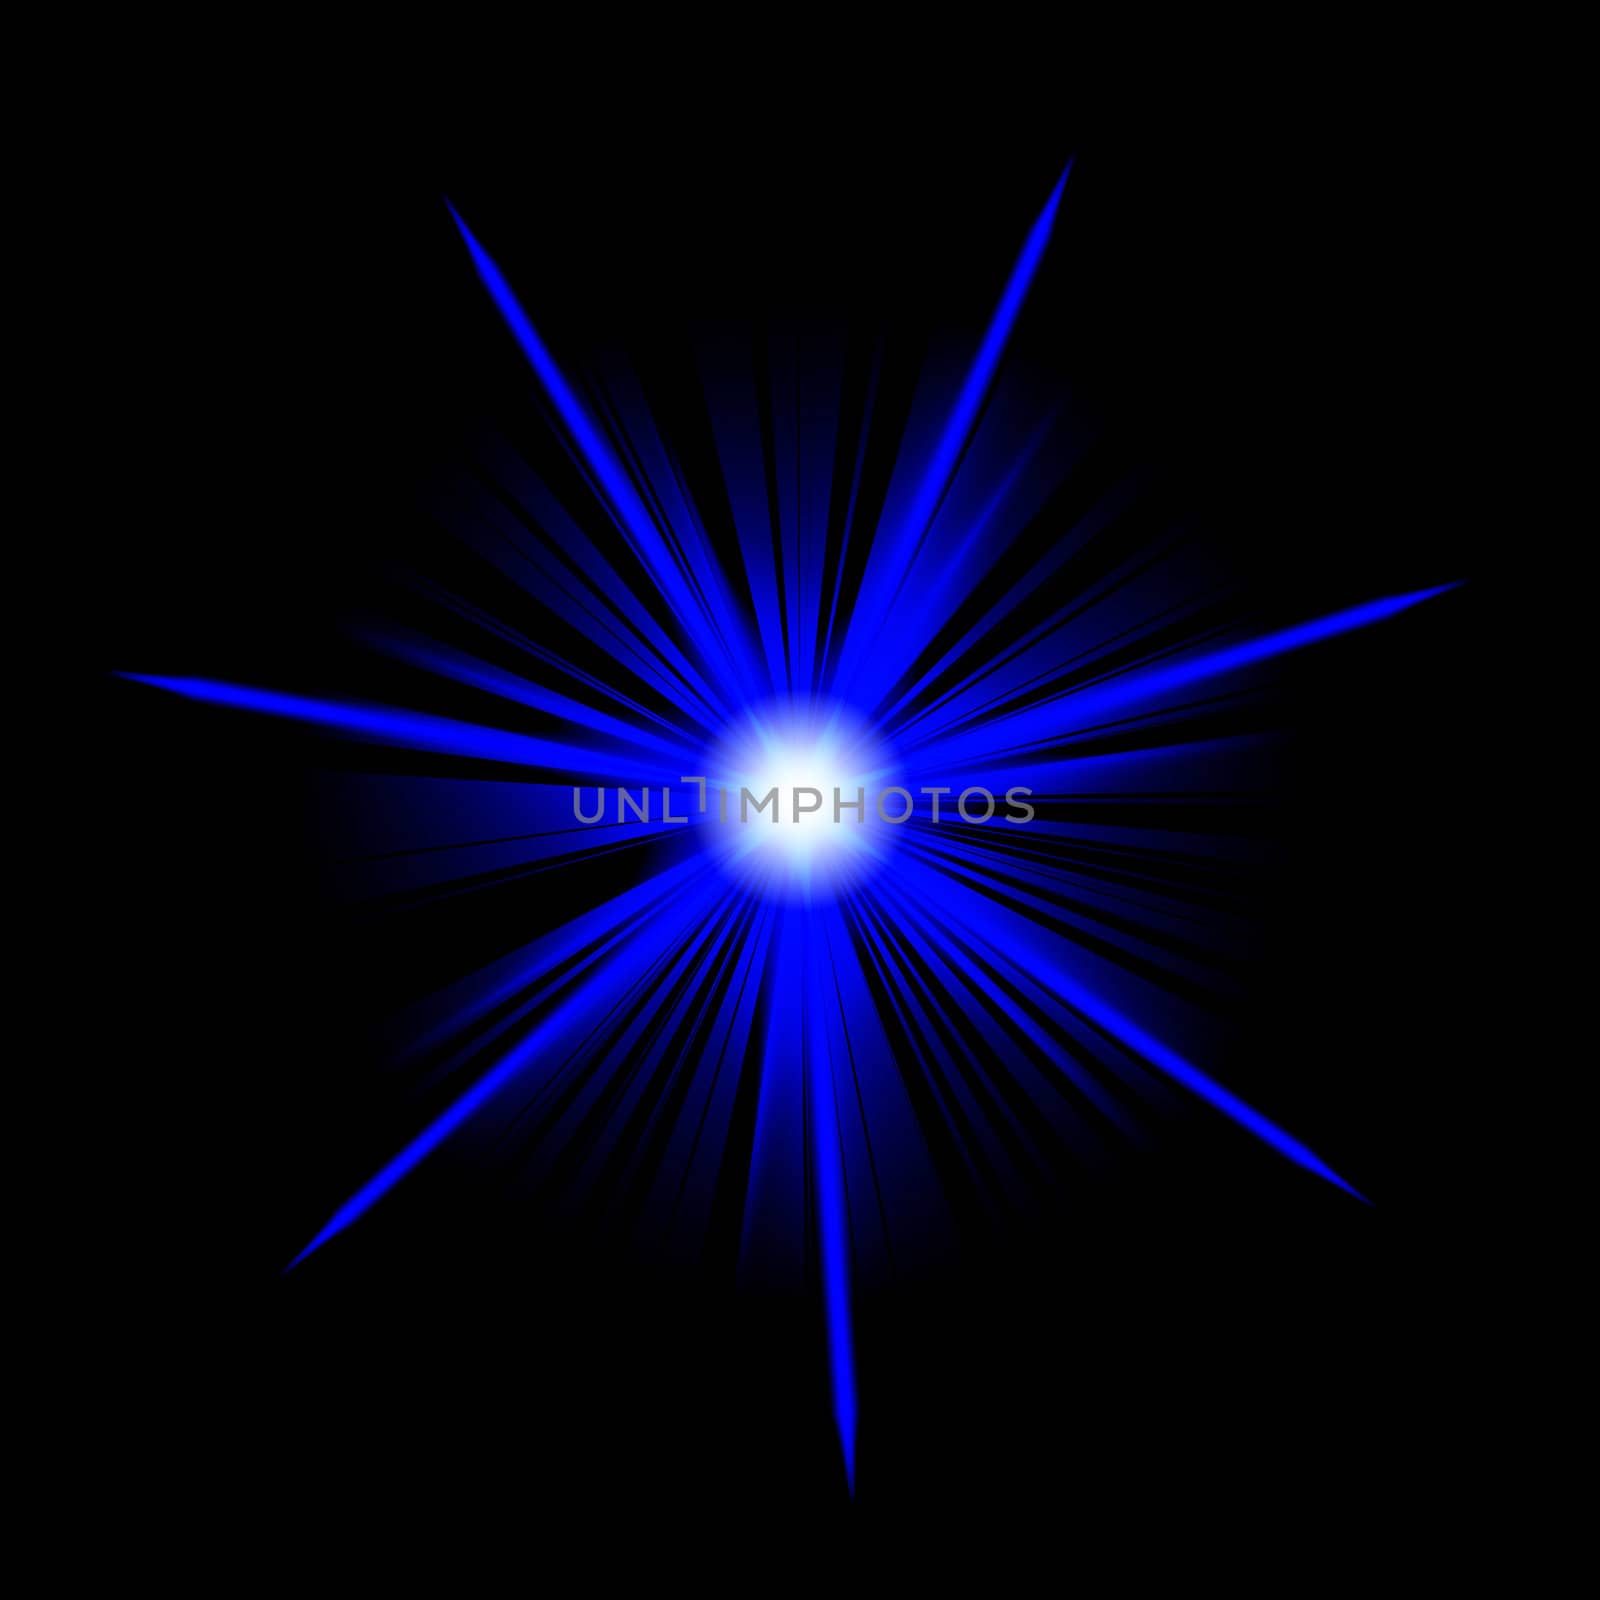  blue star or supernova over black